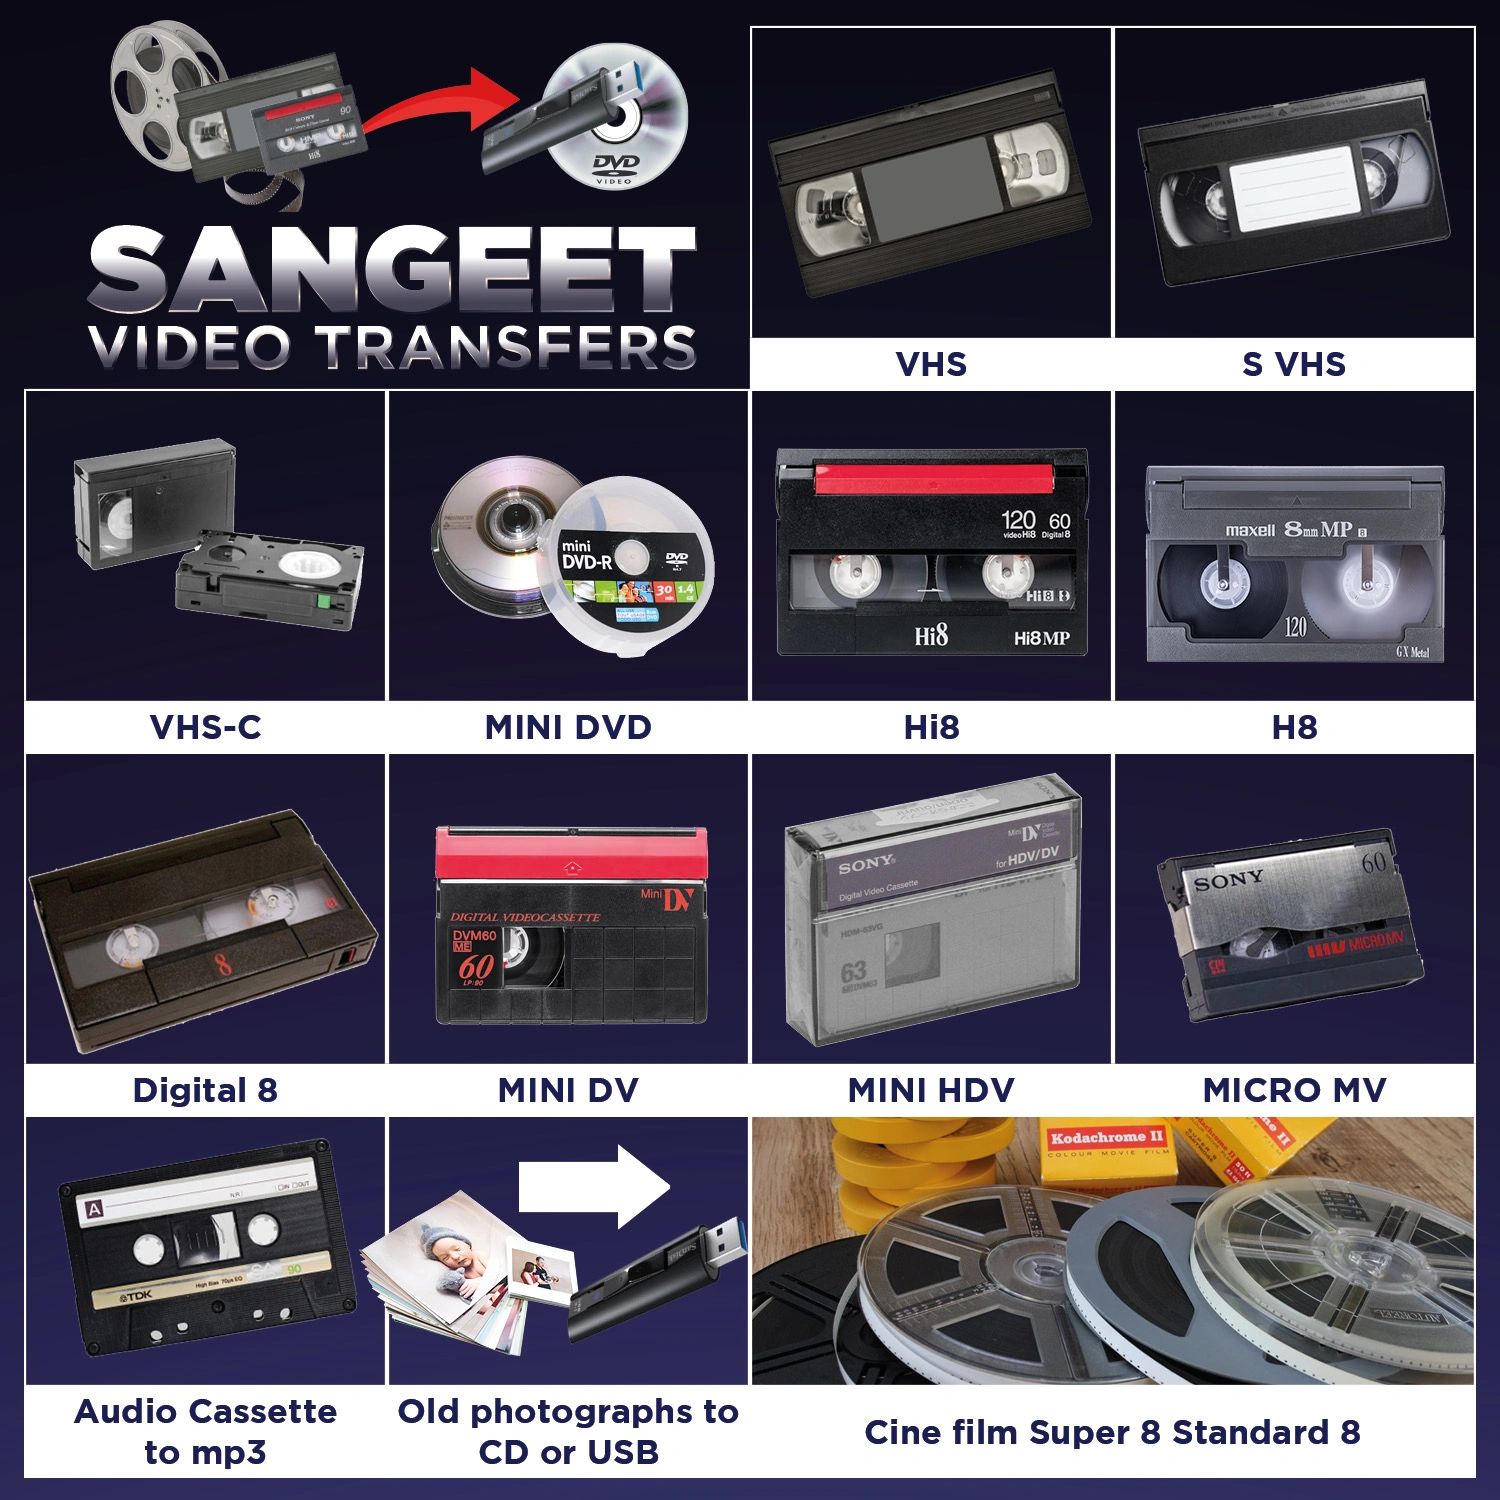 Sangeet Video Transfers